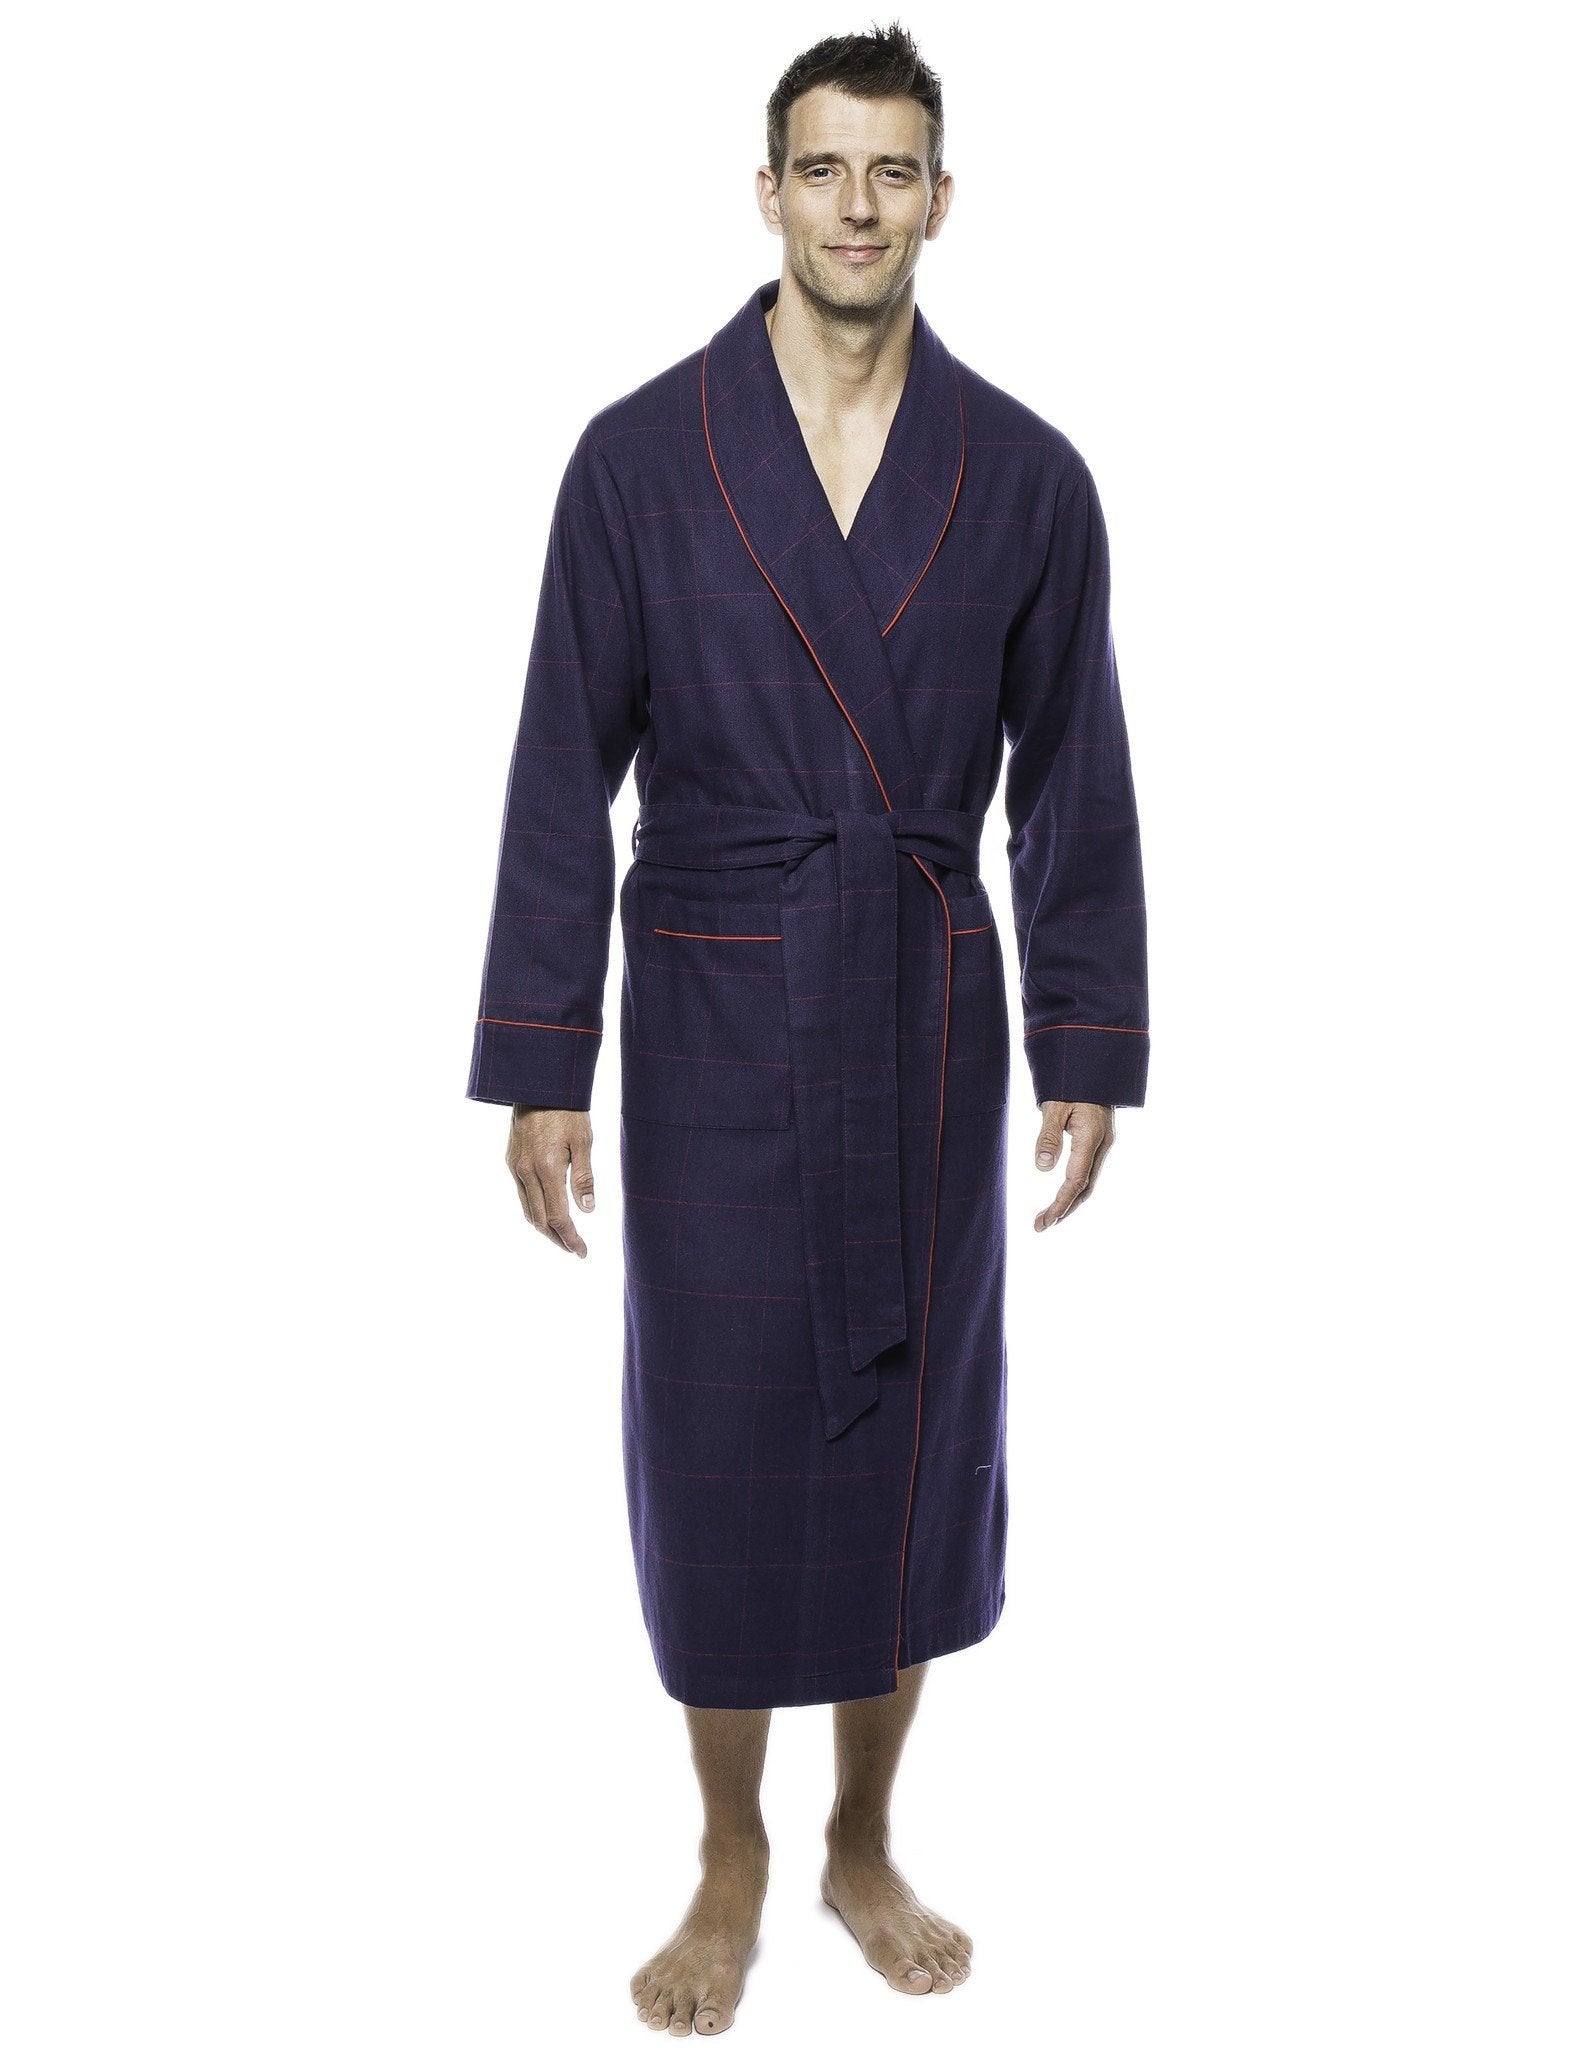 Mens Premium 100% Cotton Flannel Robe - Windowpane Checks Blue/Red